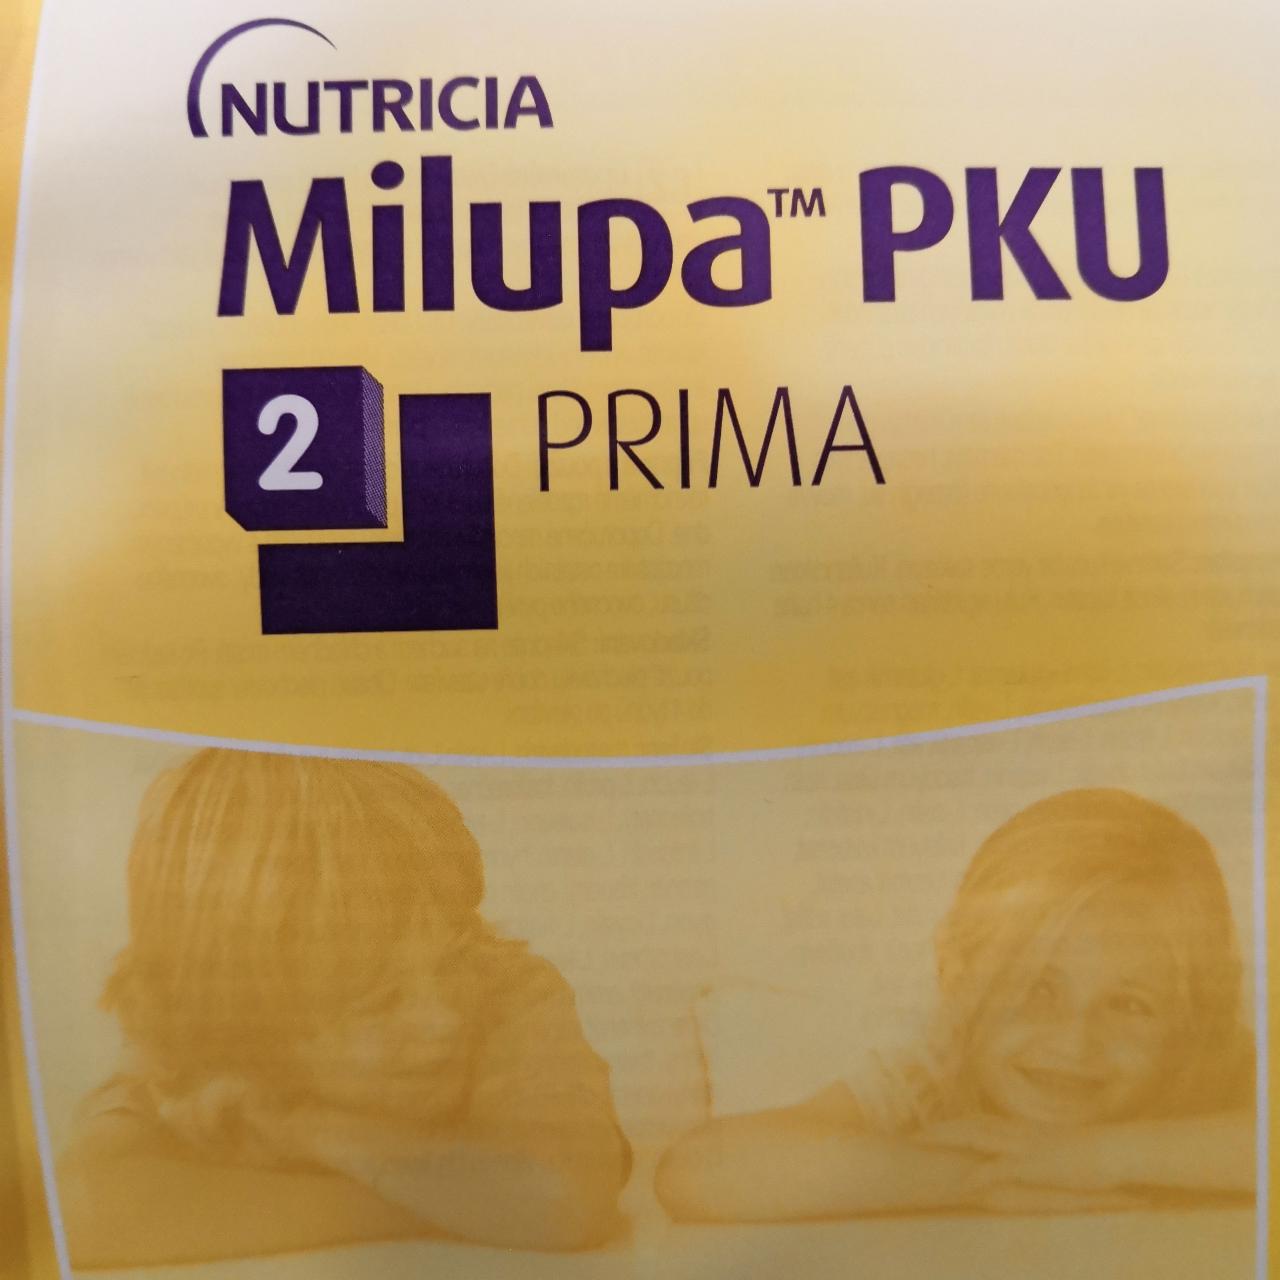 Fotografie - Milupa PKU 2 Prima Nutricia